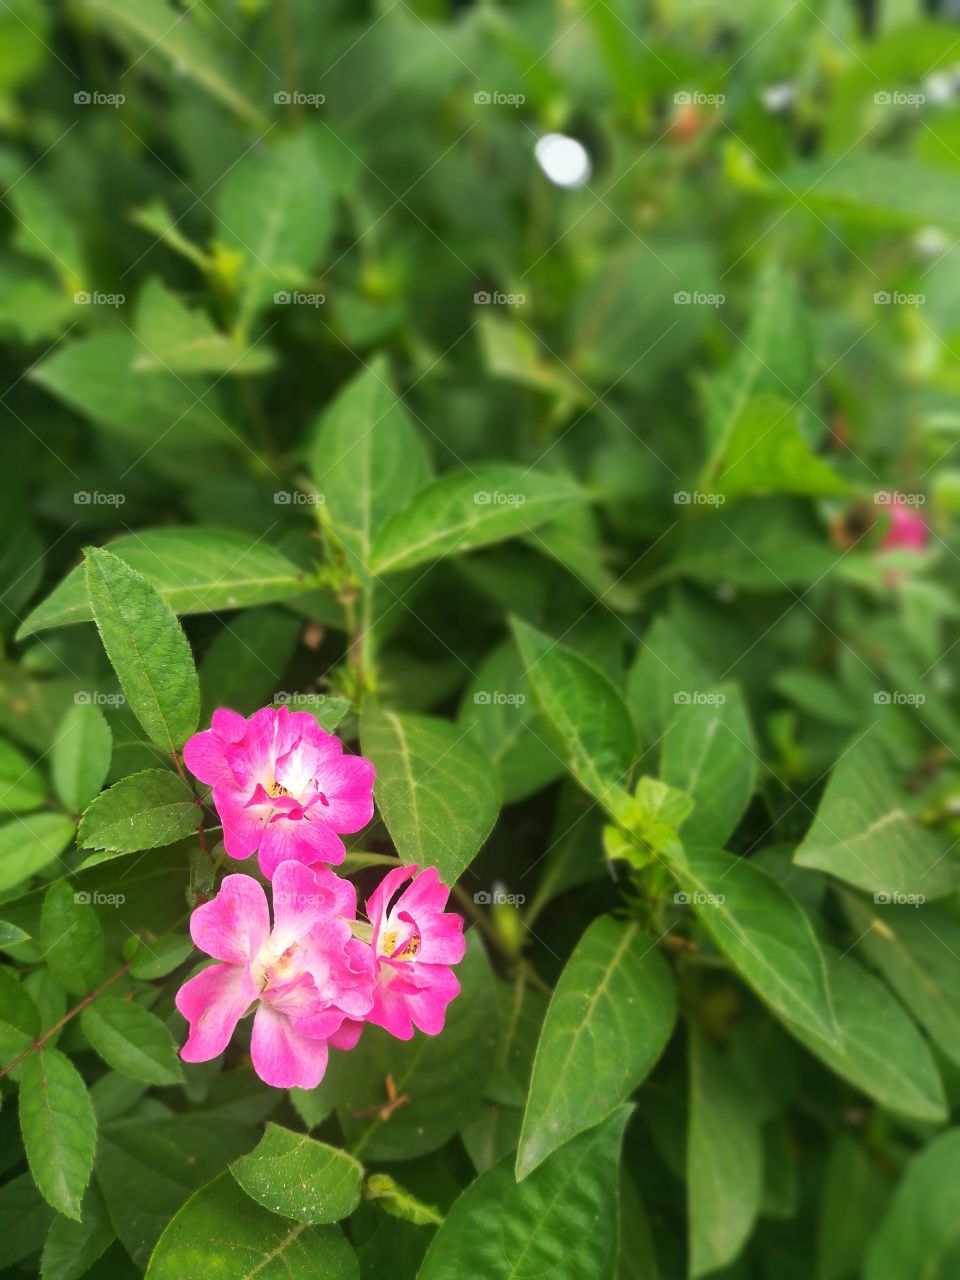 pinky cute flowers